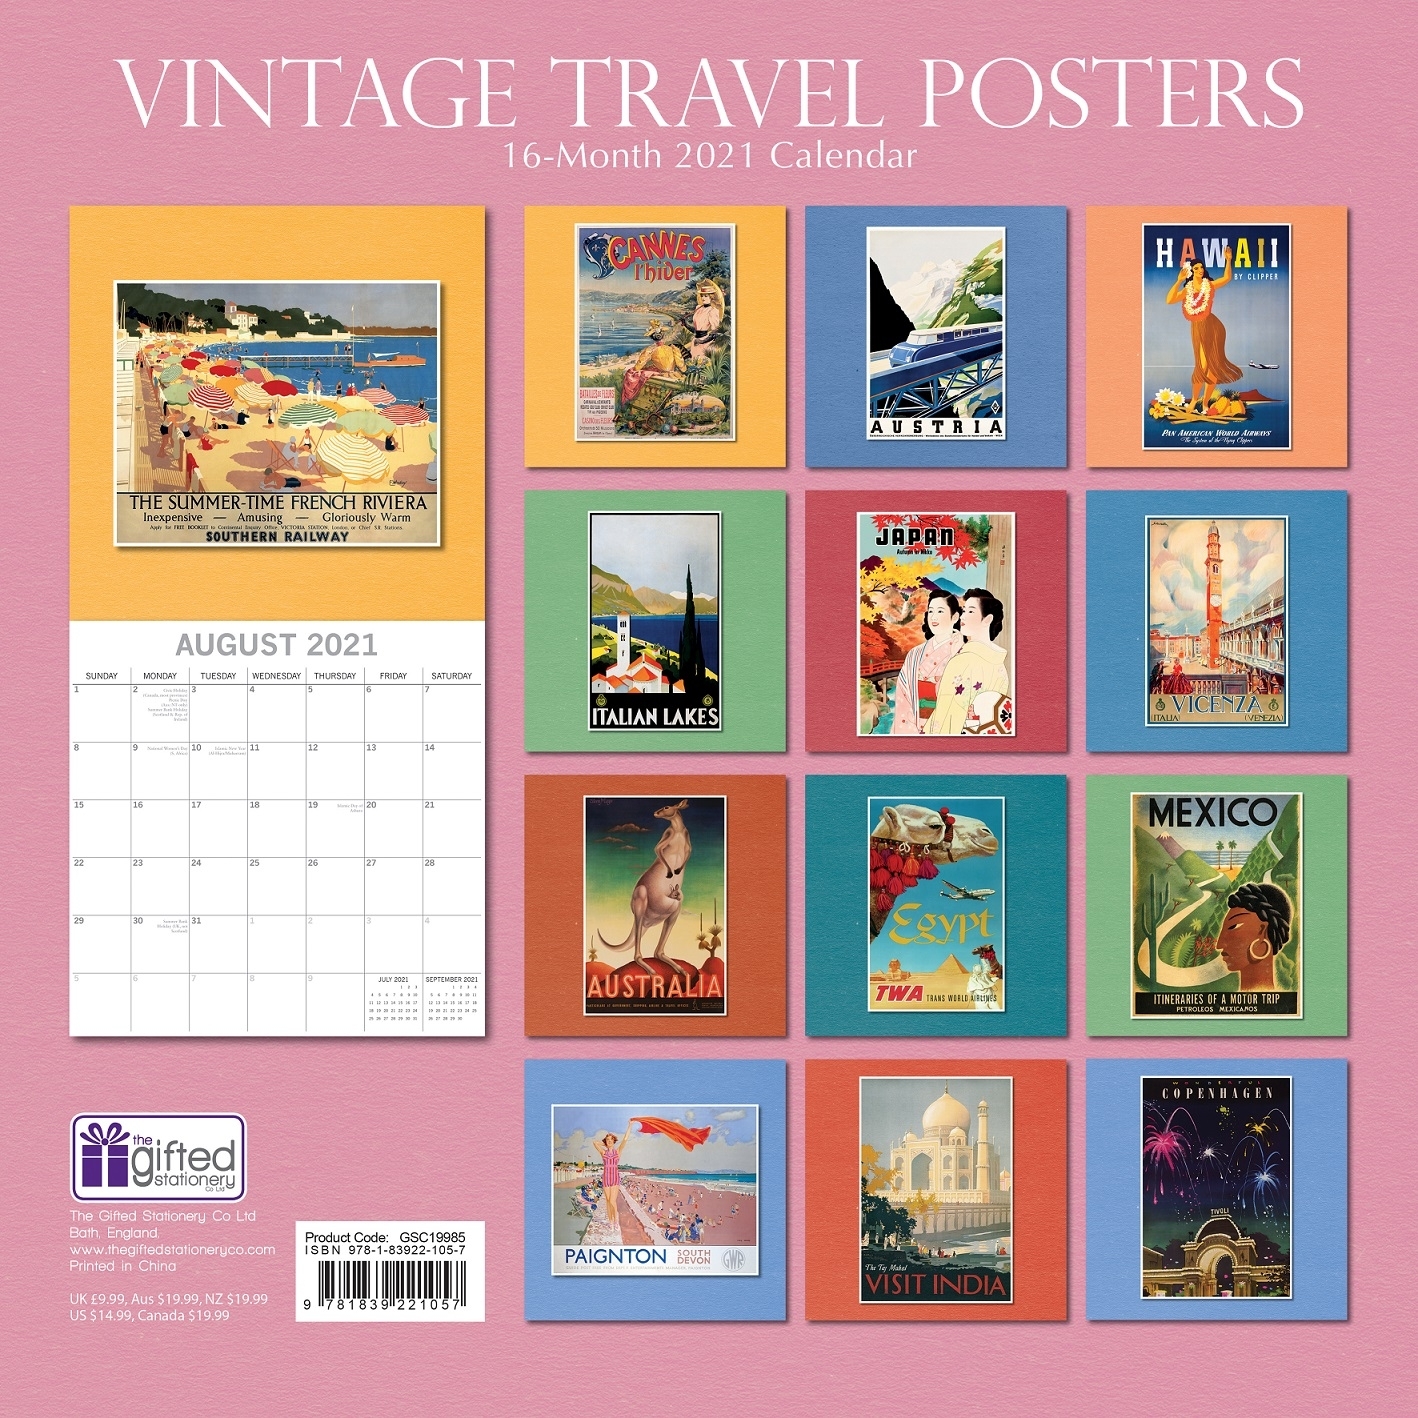 2021 Vintage Travel Calendar | Save The Children Shop